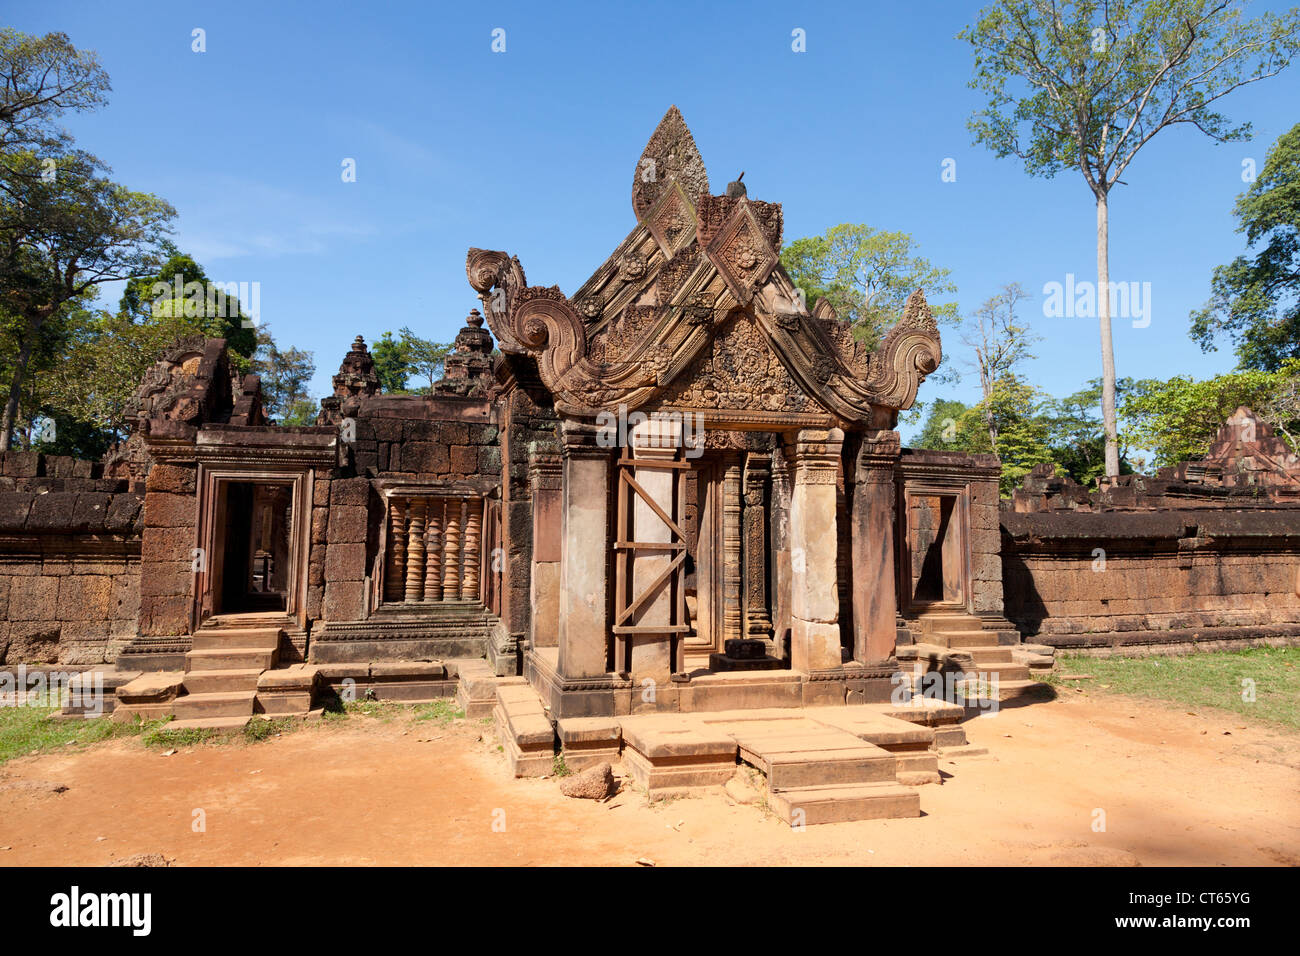 Banteay Srey temple, Cambodia Stock Photo